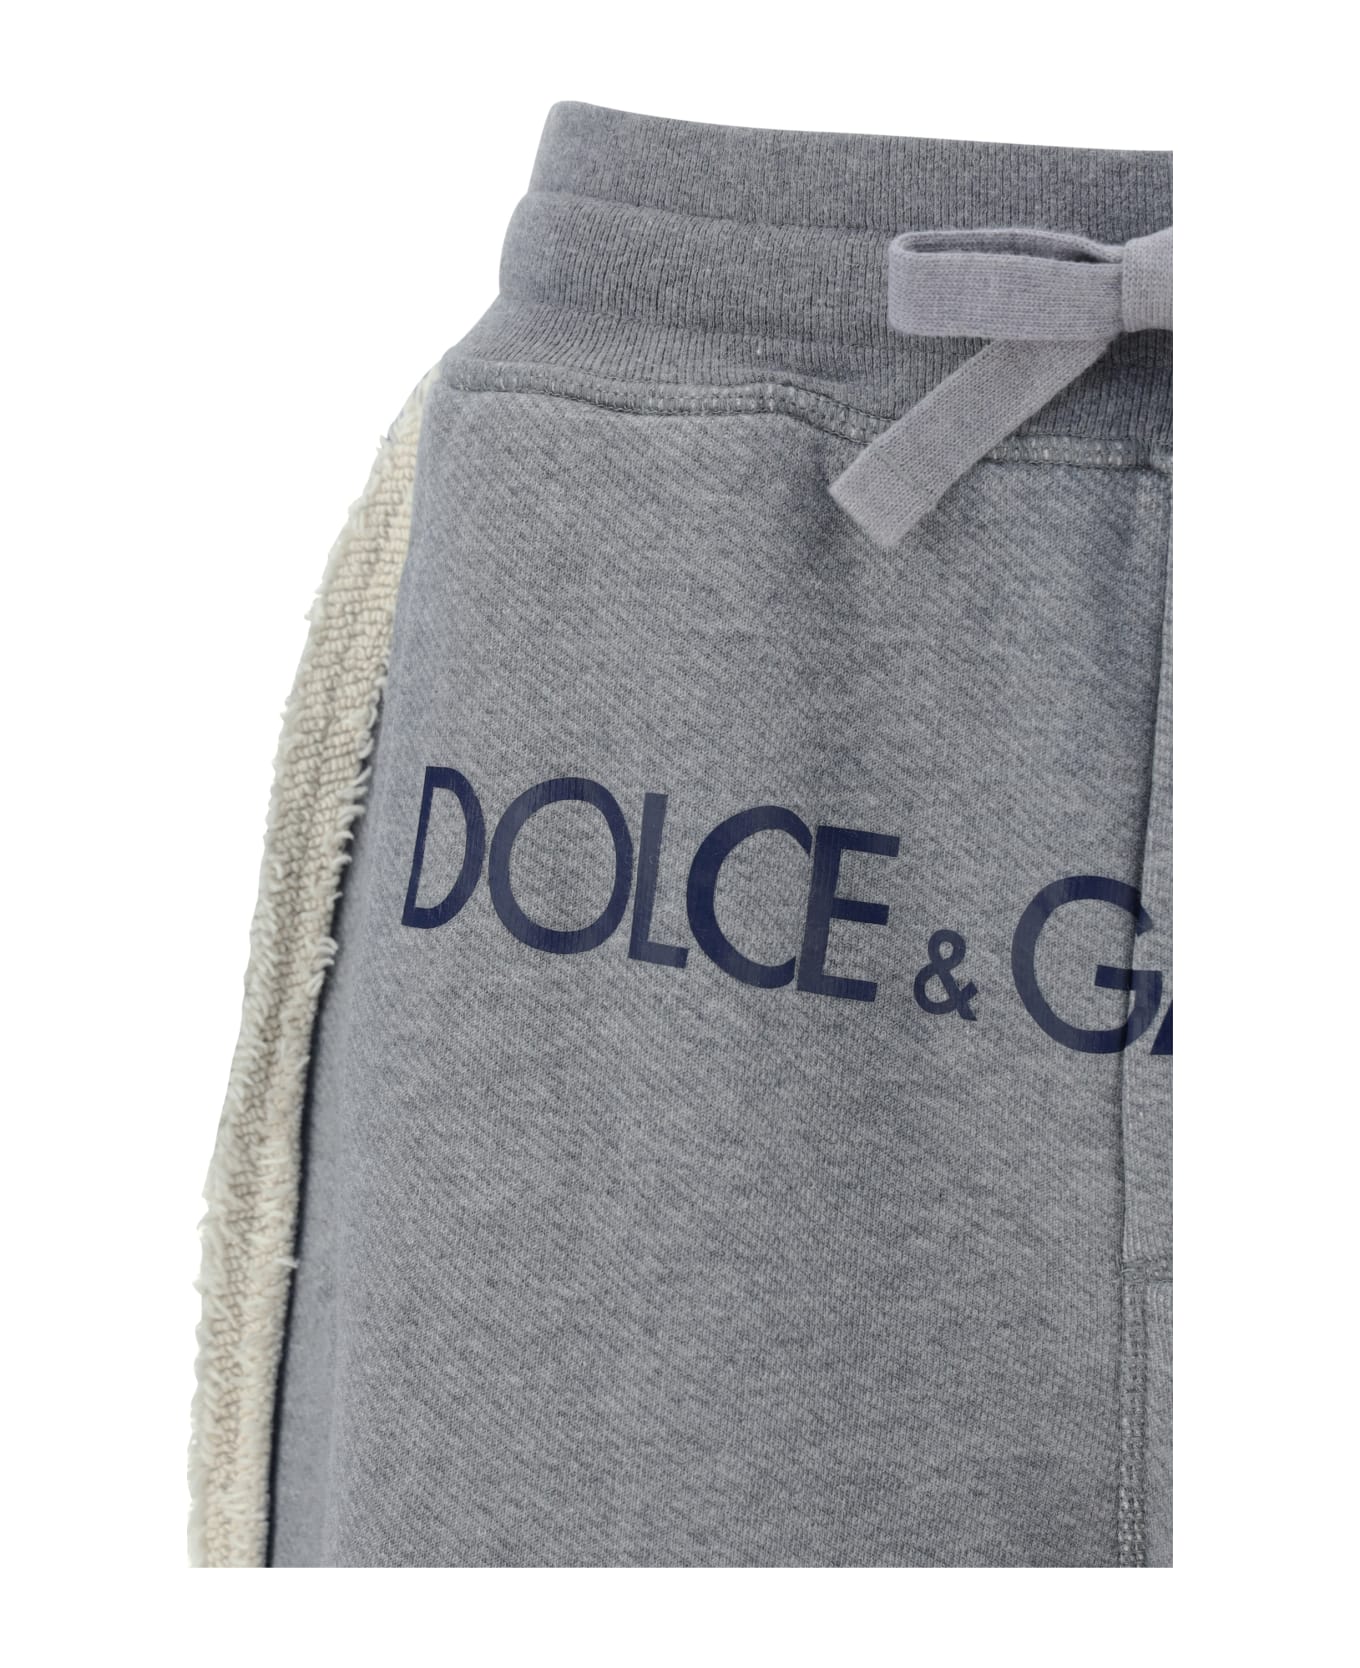 Dolce & Gabbana Sweatpants - Melange Grigio スウェットパンツ